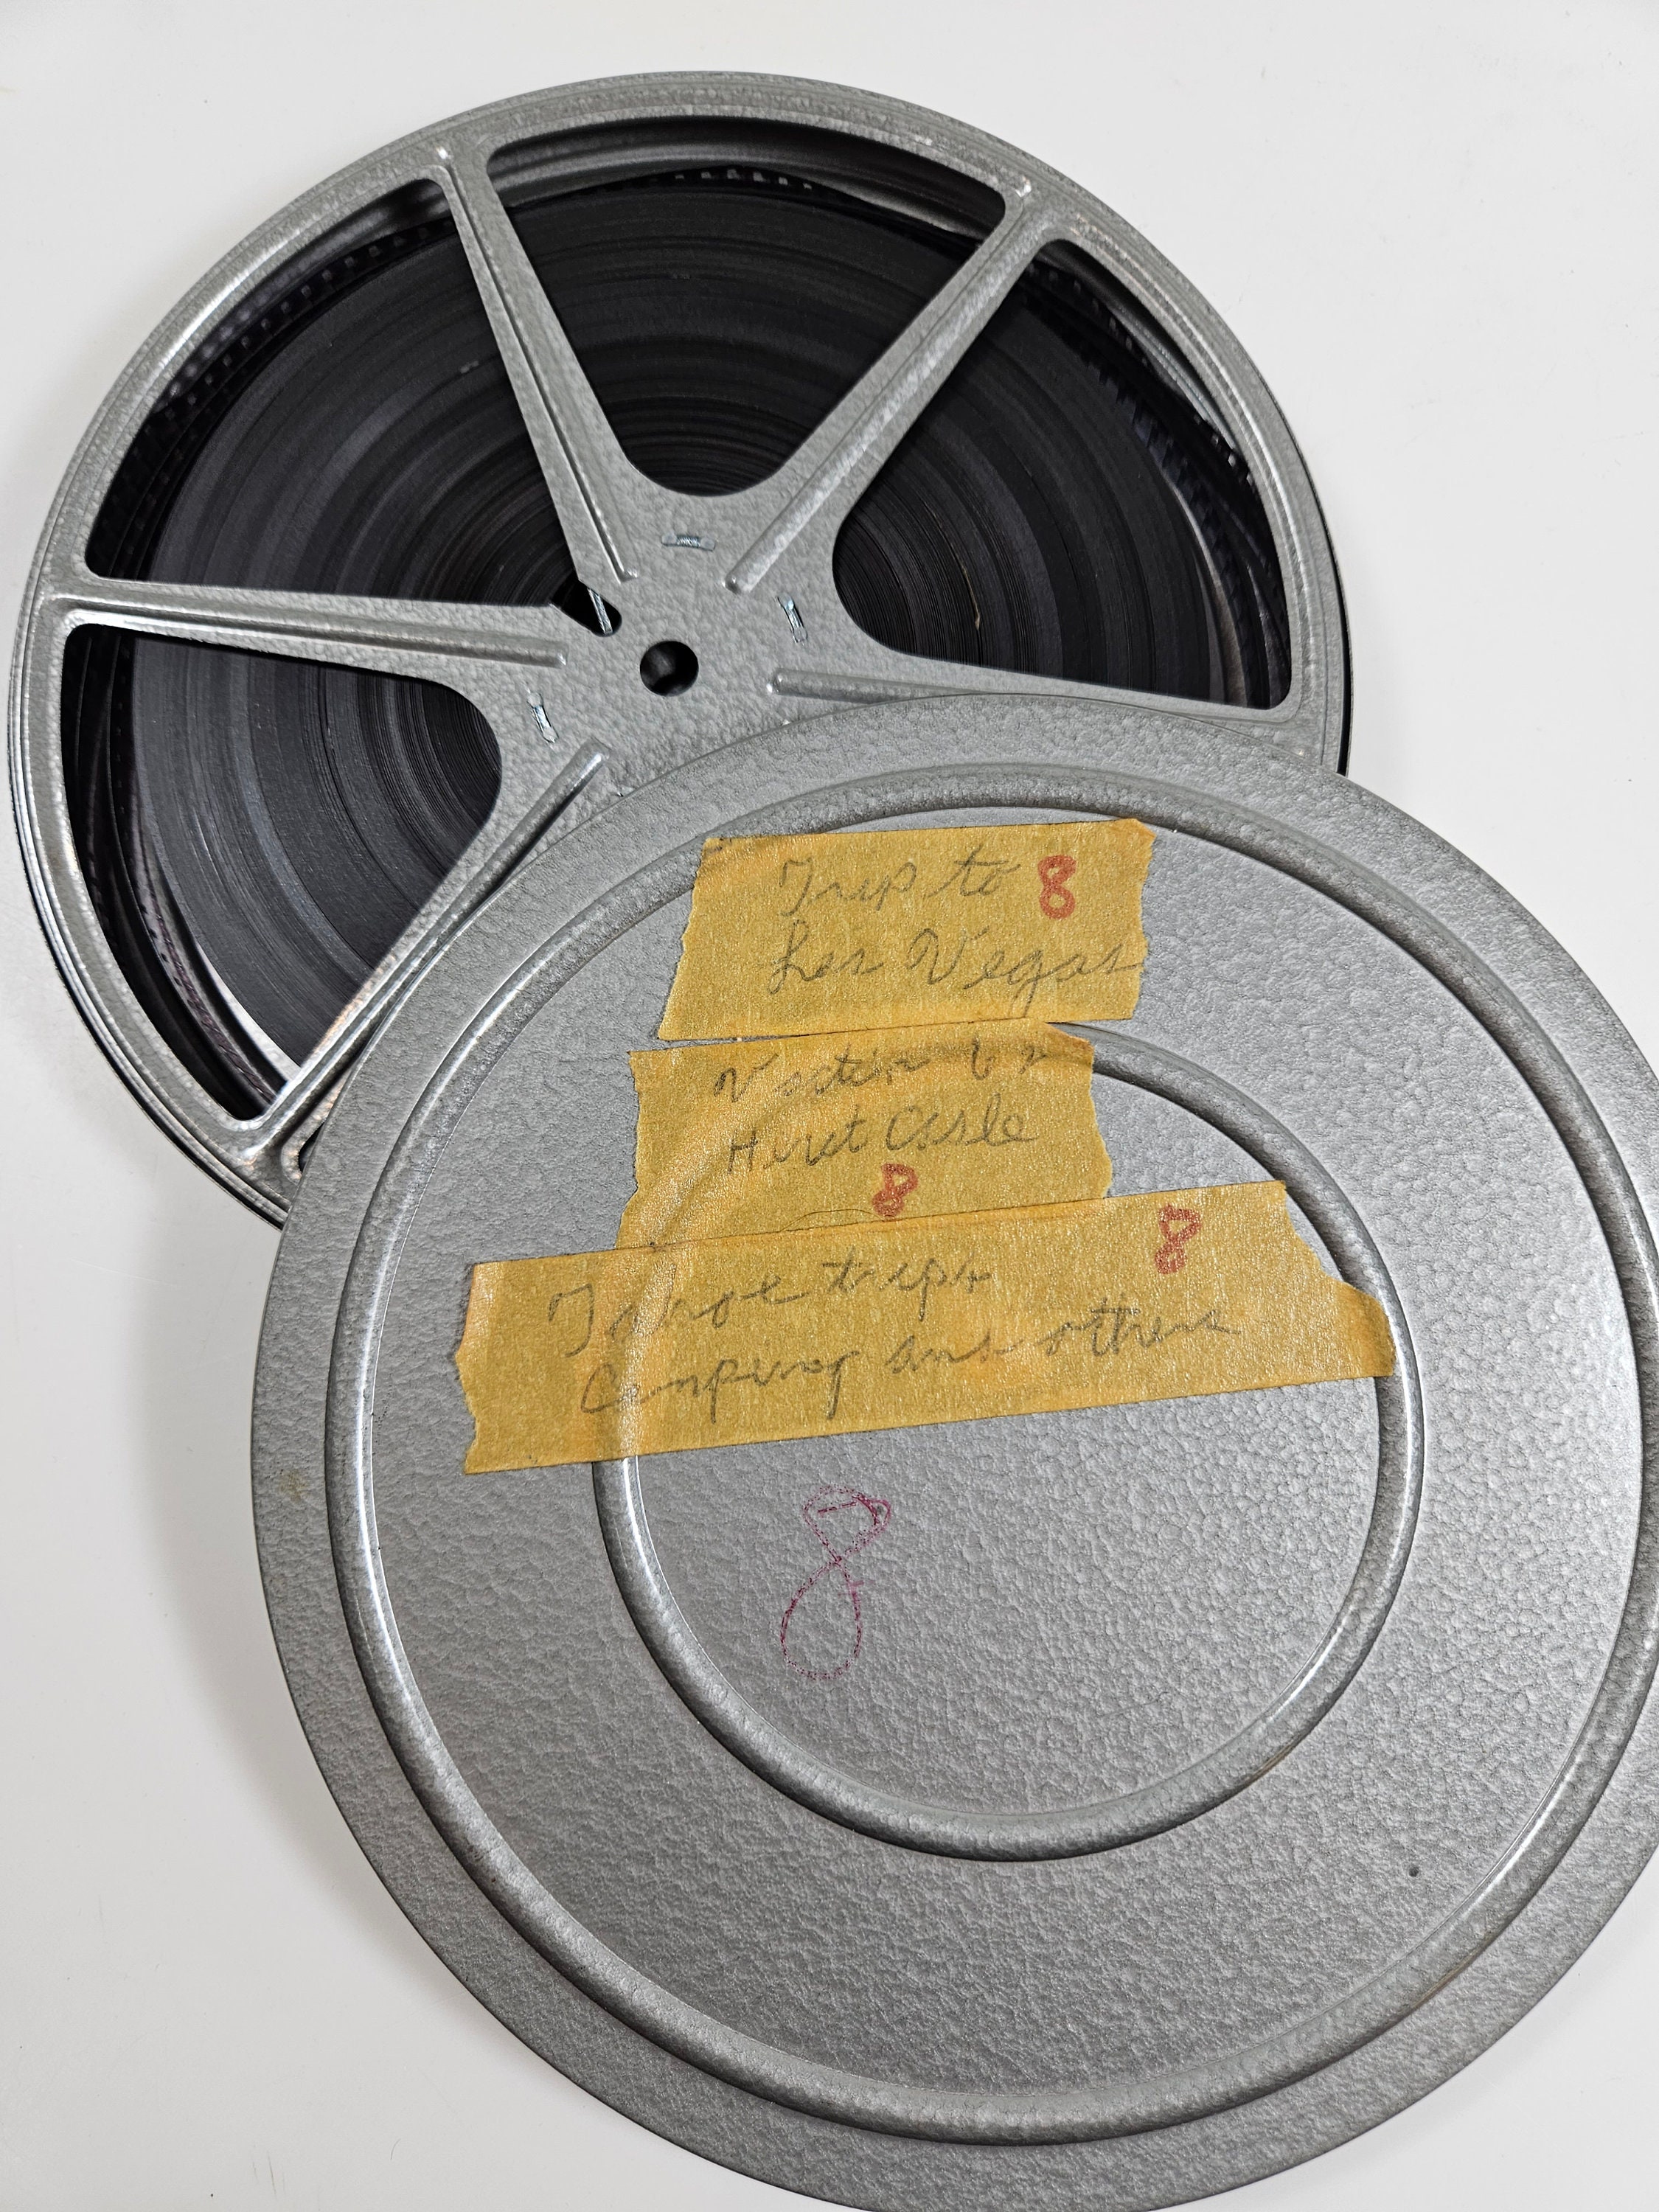 8MM 3 inch 50ft Film Movie REEL : Electronics 